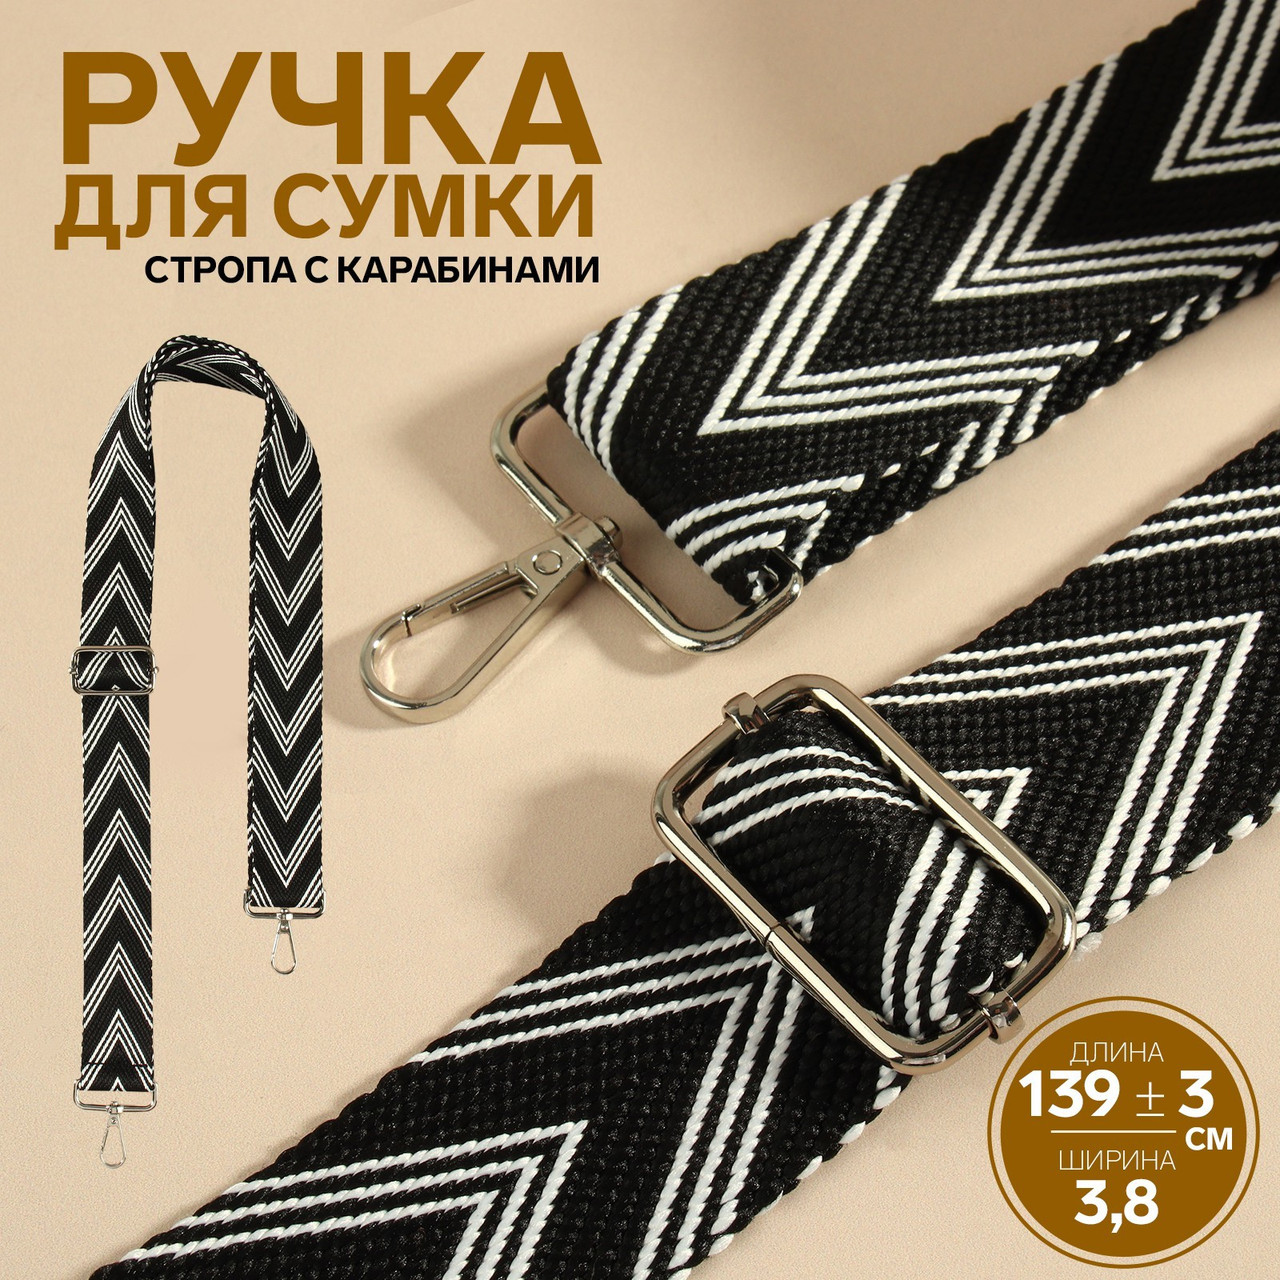 Ручка для сумки Стрелки черно-белые, стропа, 139 × 3,8 см беж